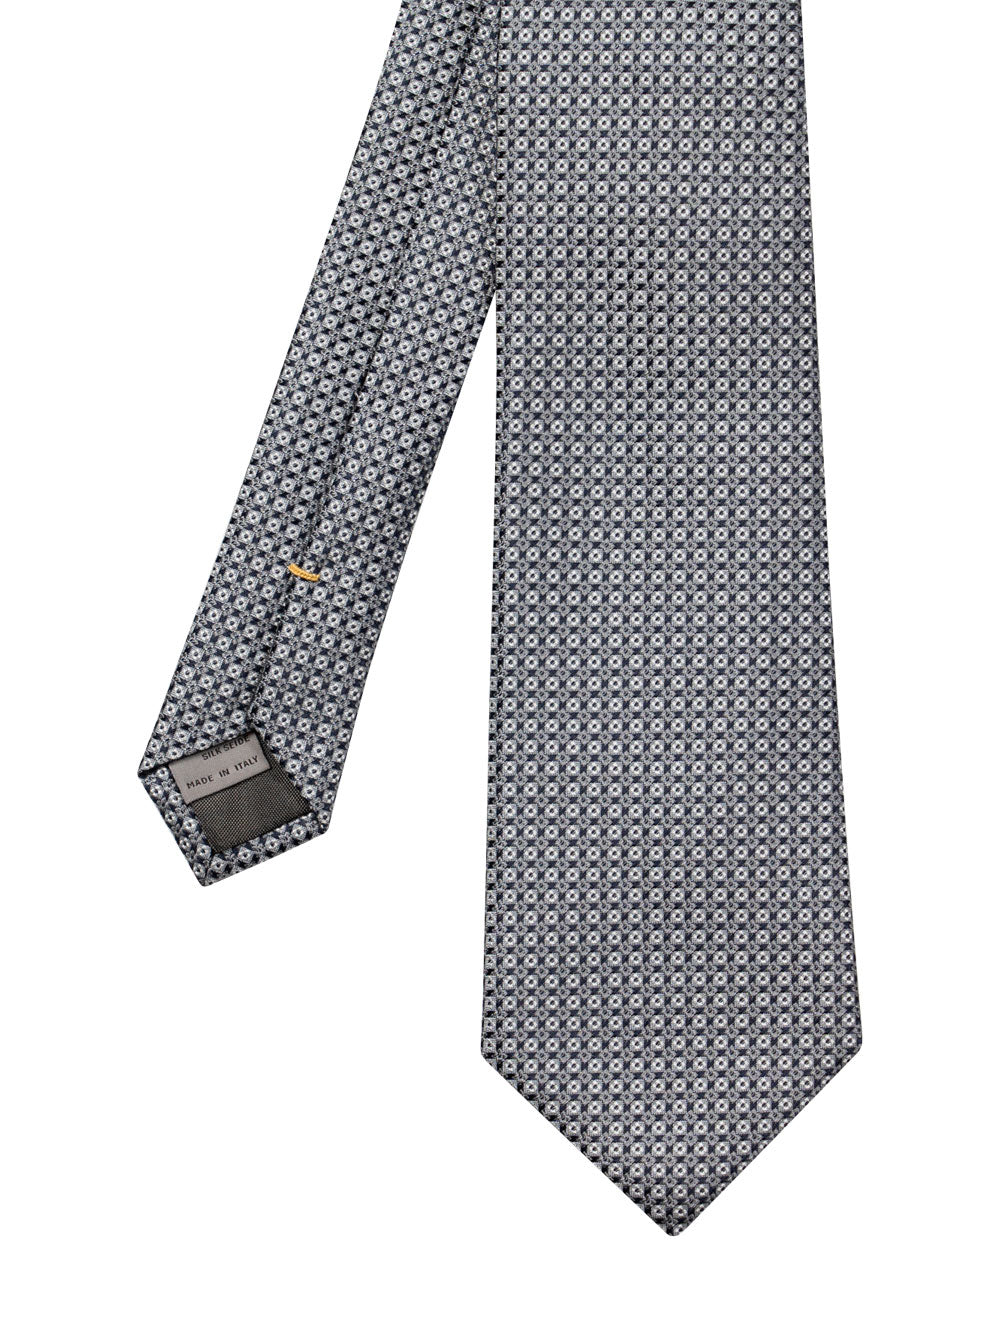 Morning coat grey and black silk tie